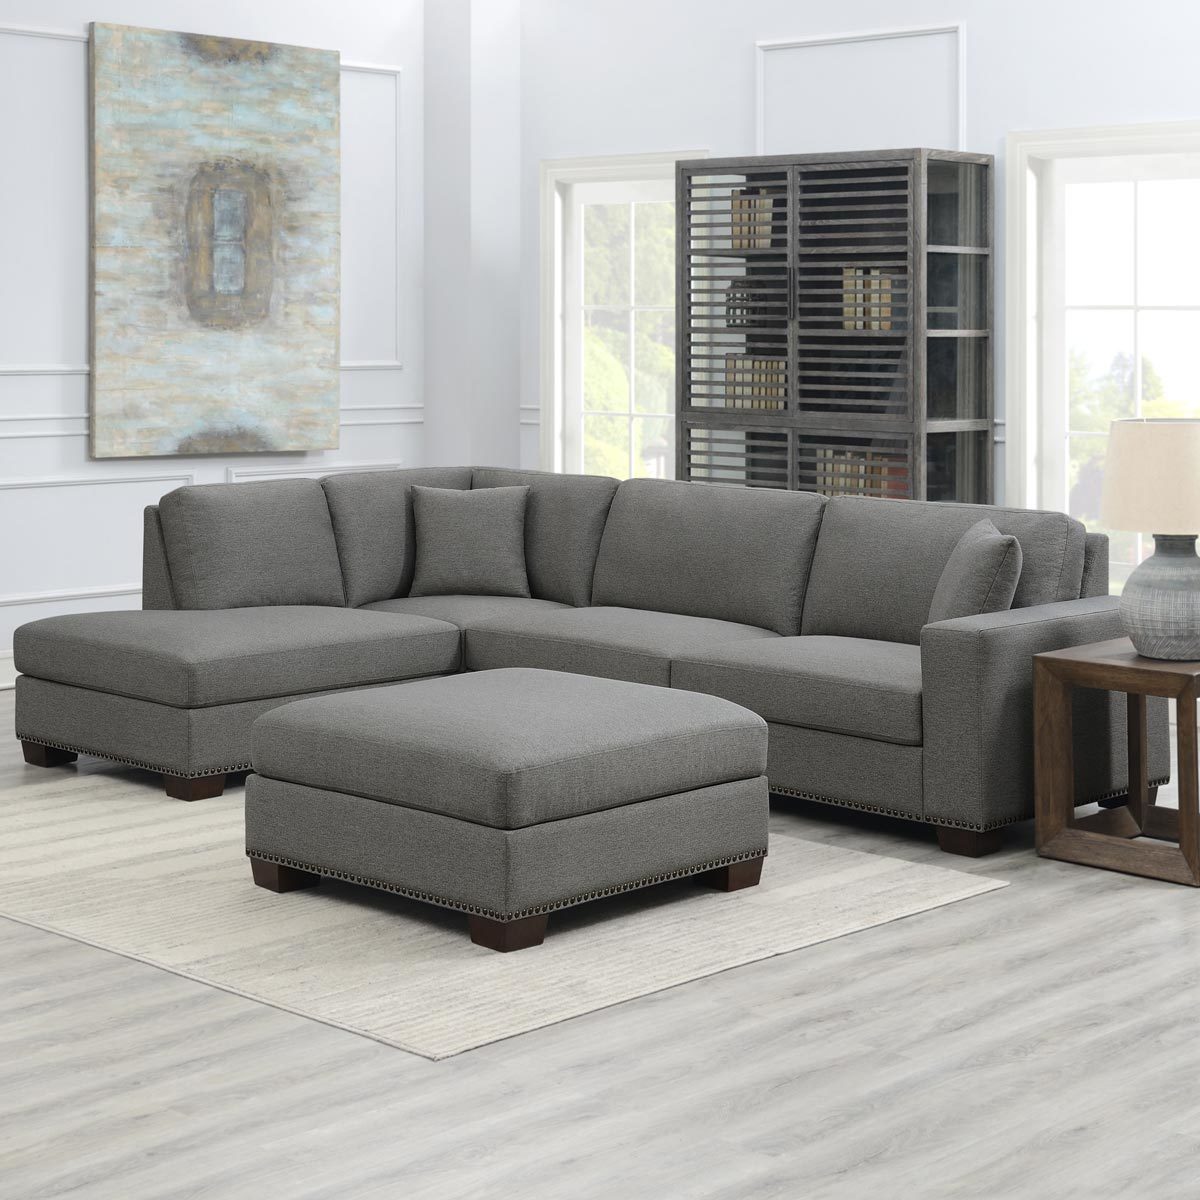 Thomasville Artesia Grey Fabric Sectional Sofa With Ottoman